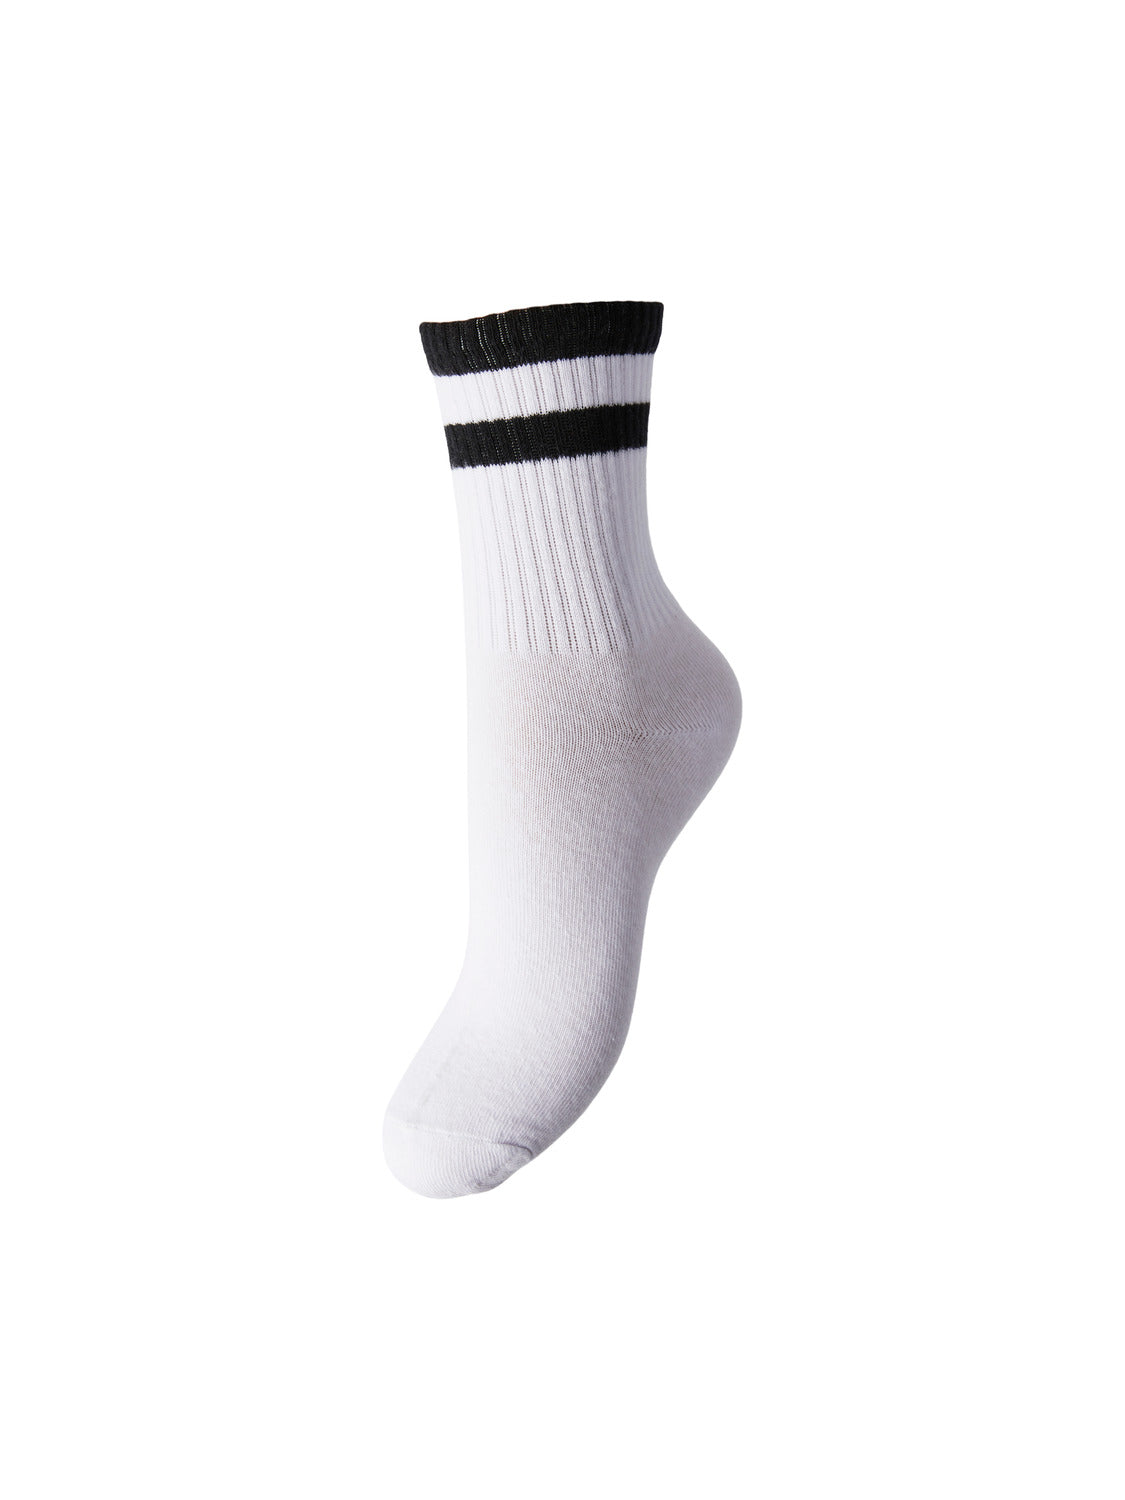 PCSANNE Socks - Bright White